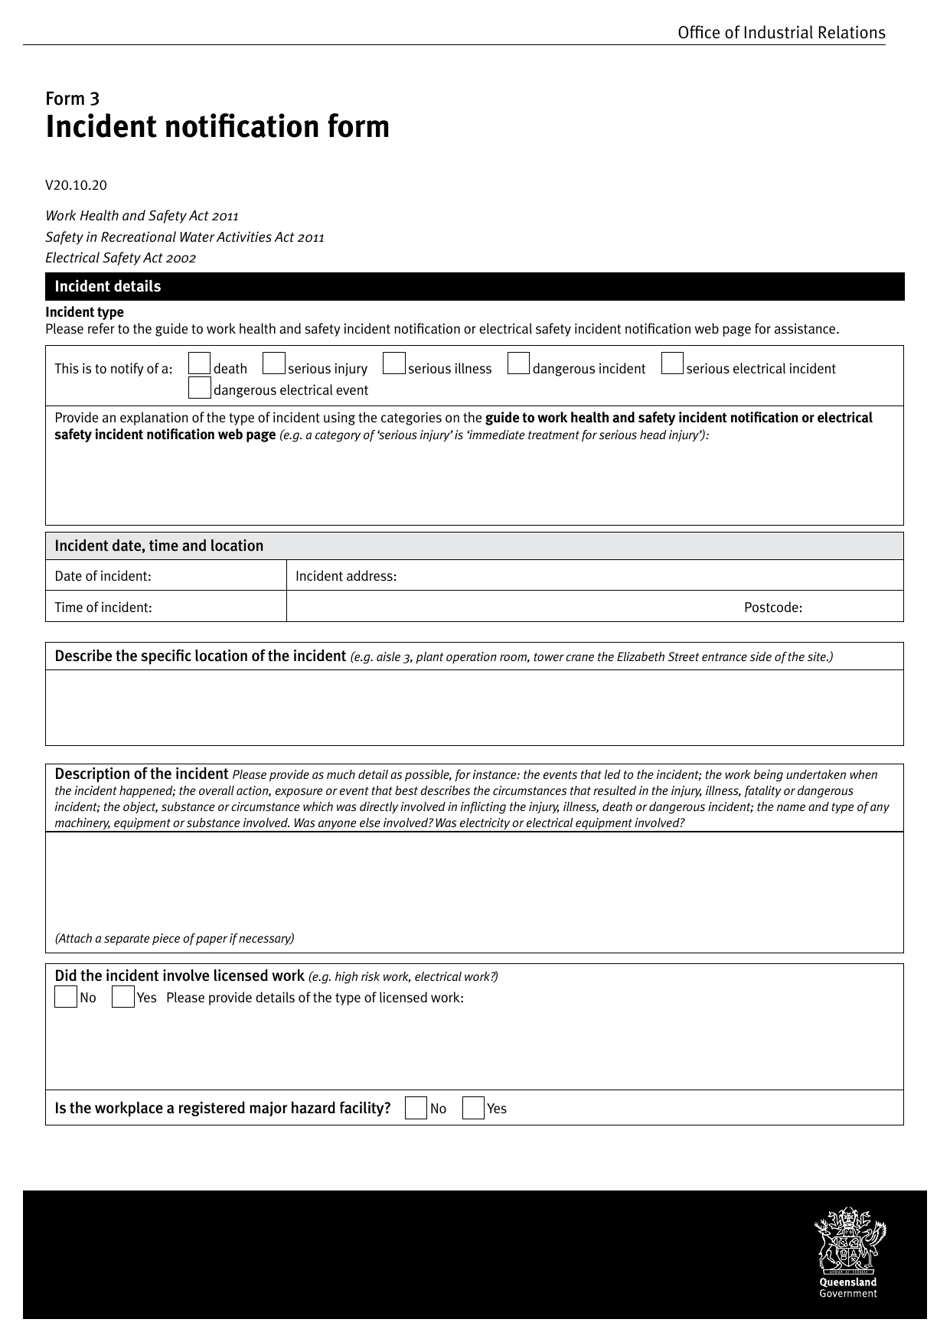 Form 3 Incident Notification Form - Queensland, Australia, Page 1